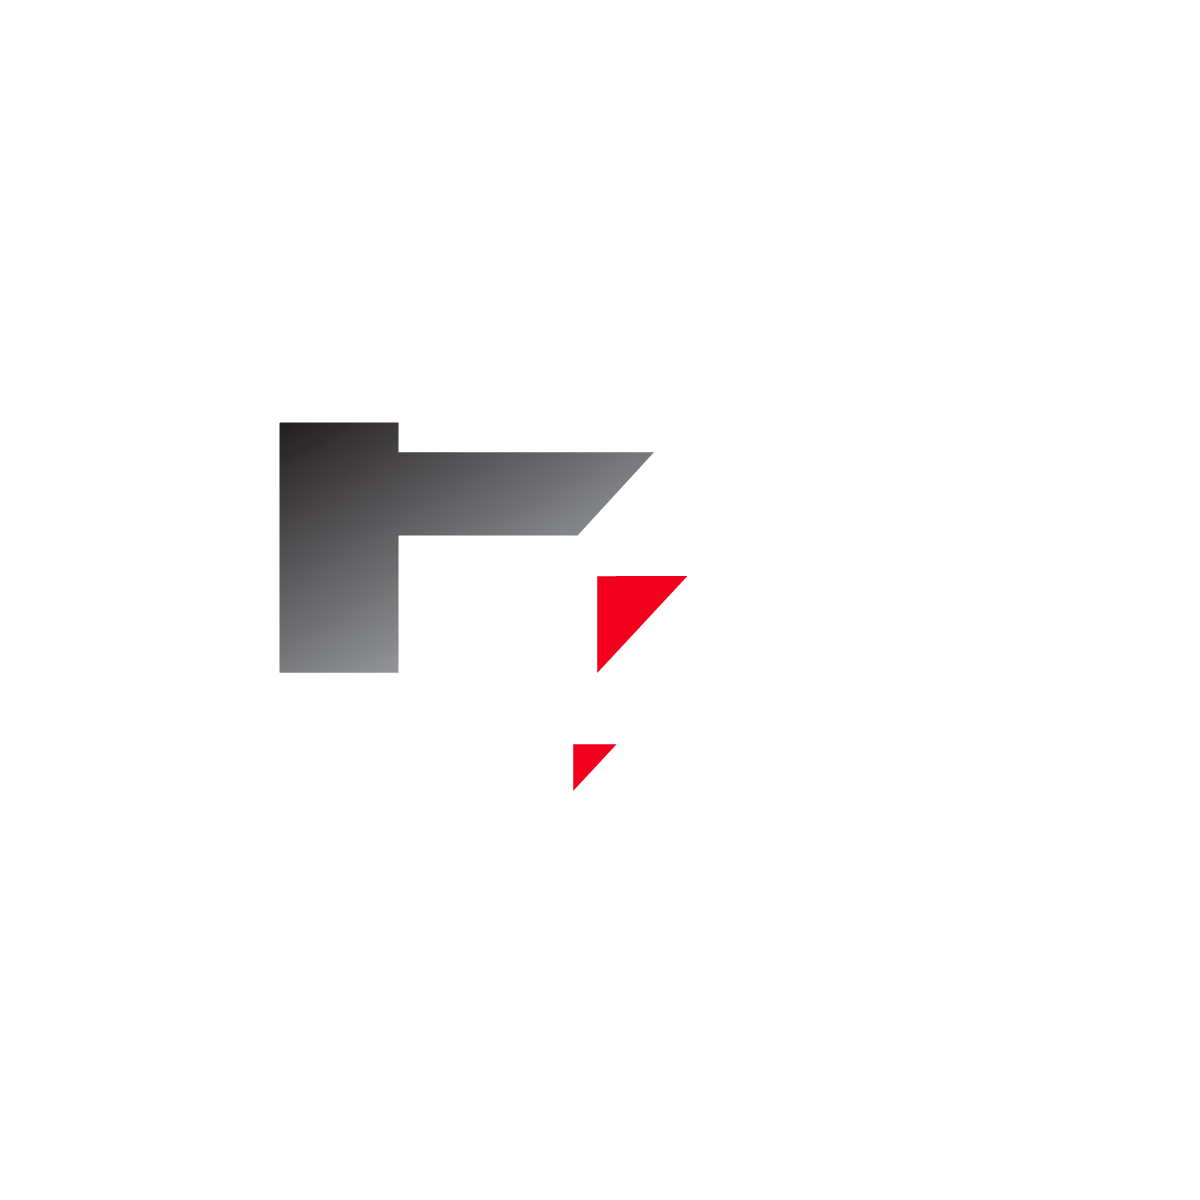 Red Bowman Logo - Fessler & Bowman, Inc.: Brand